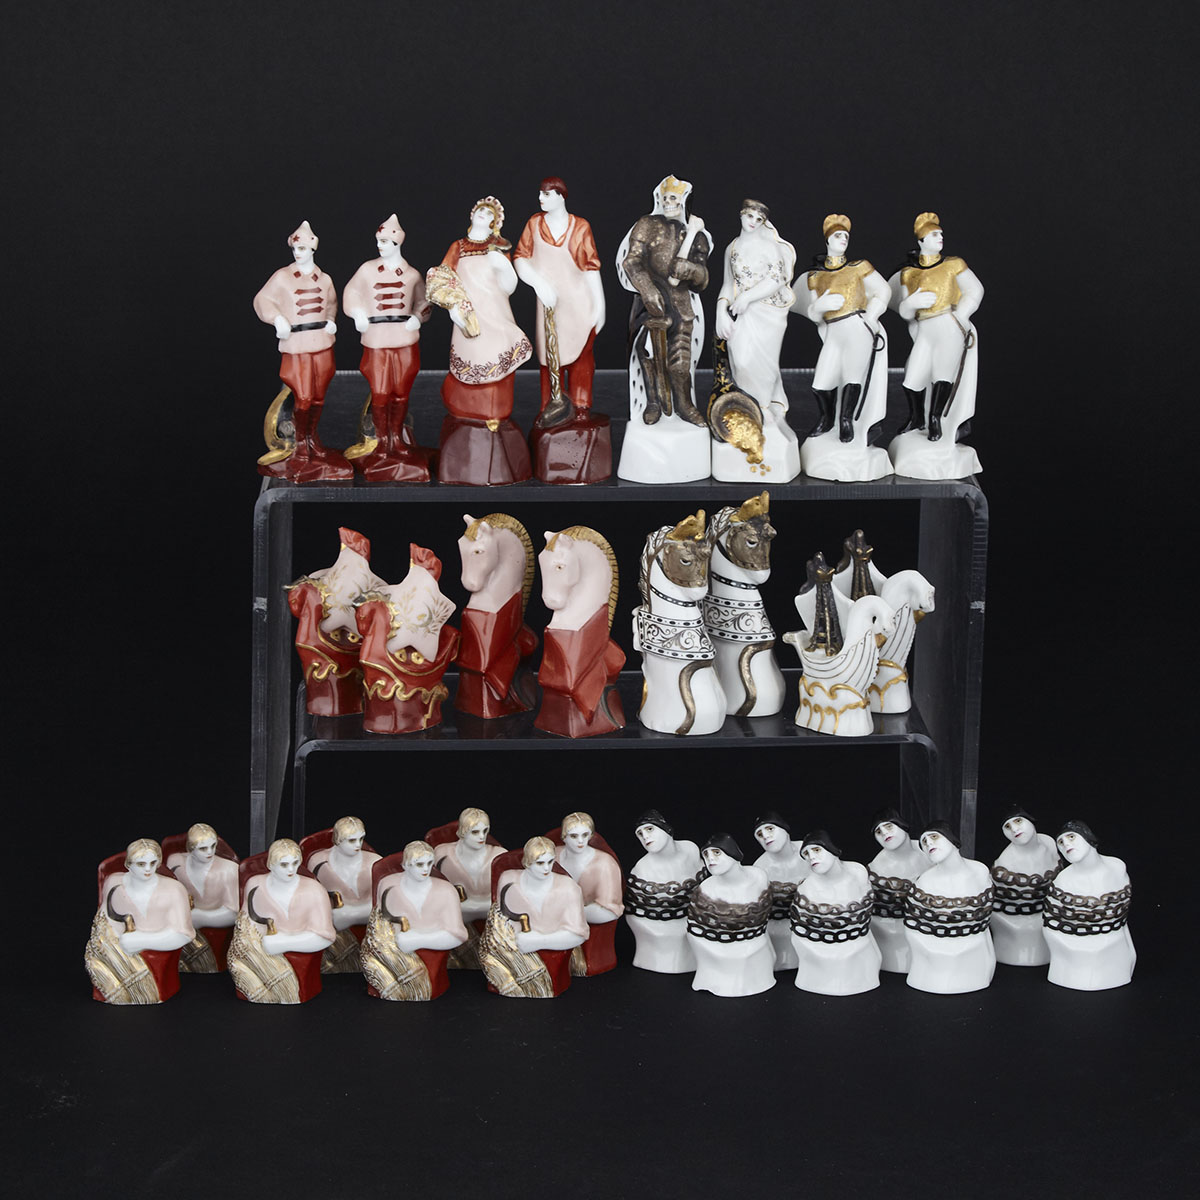 Soviet Parcel Gilt and Painted Porcelain ‘Reds vs. Whites’ Chess Set, Natalia Danko, State Porcelain Manufactory, 1933/4